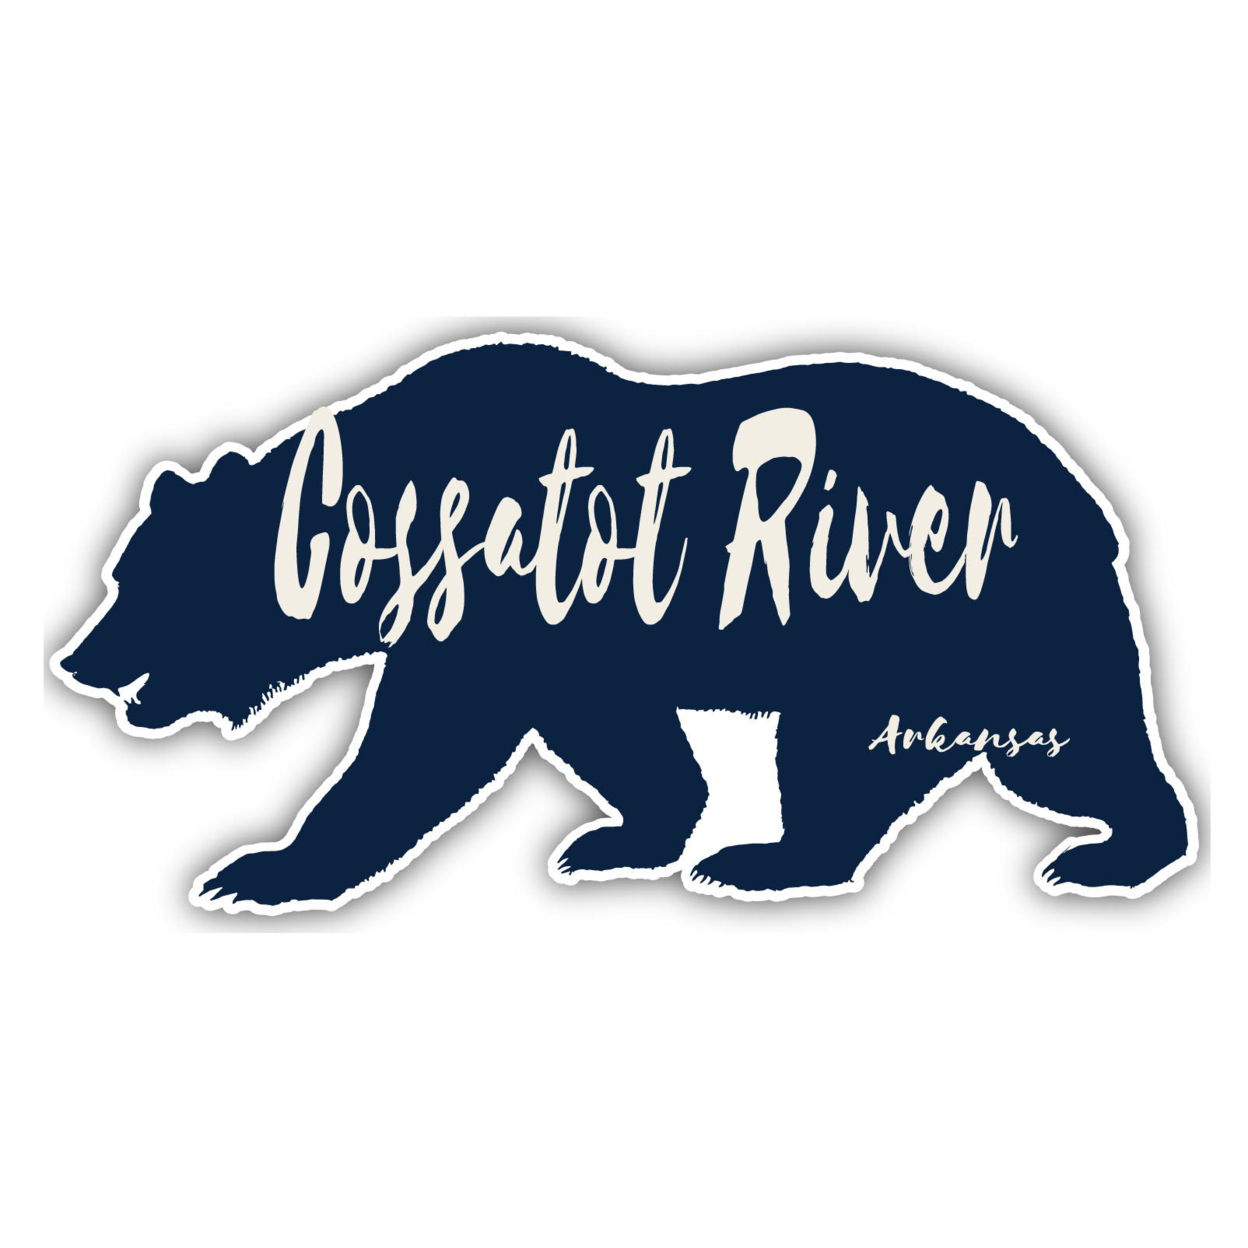 Cossatot River Arkansas Souvenir Decorative Stickers (Choose Theme And Size) - 4-Pack, 4-Inch, Bear